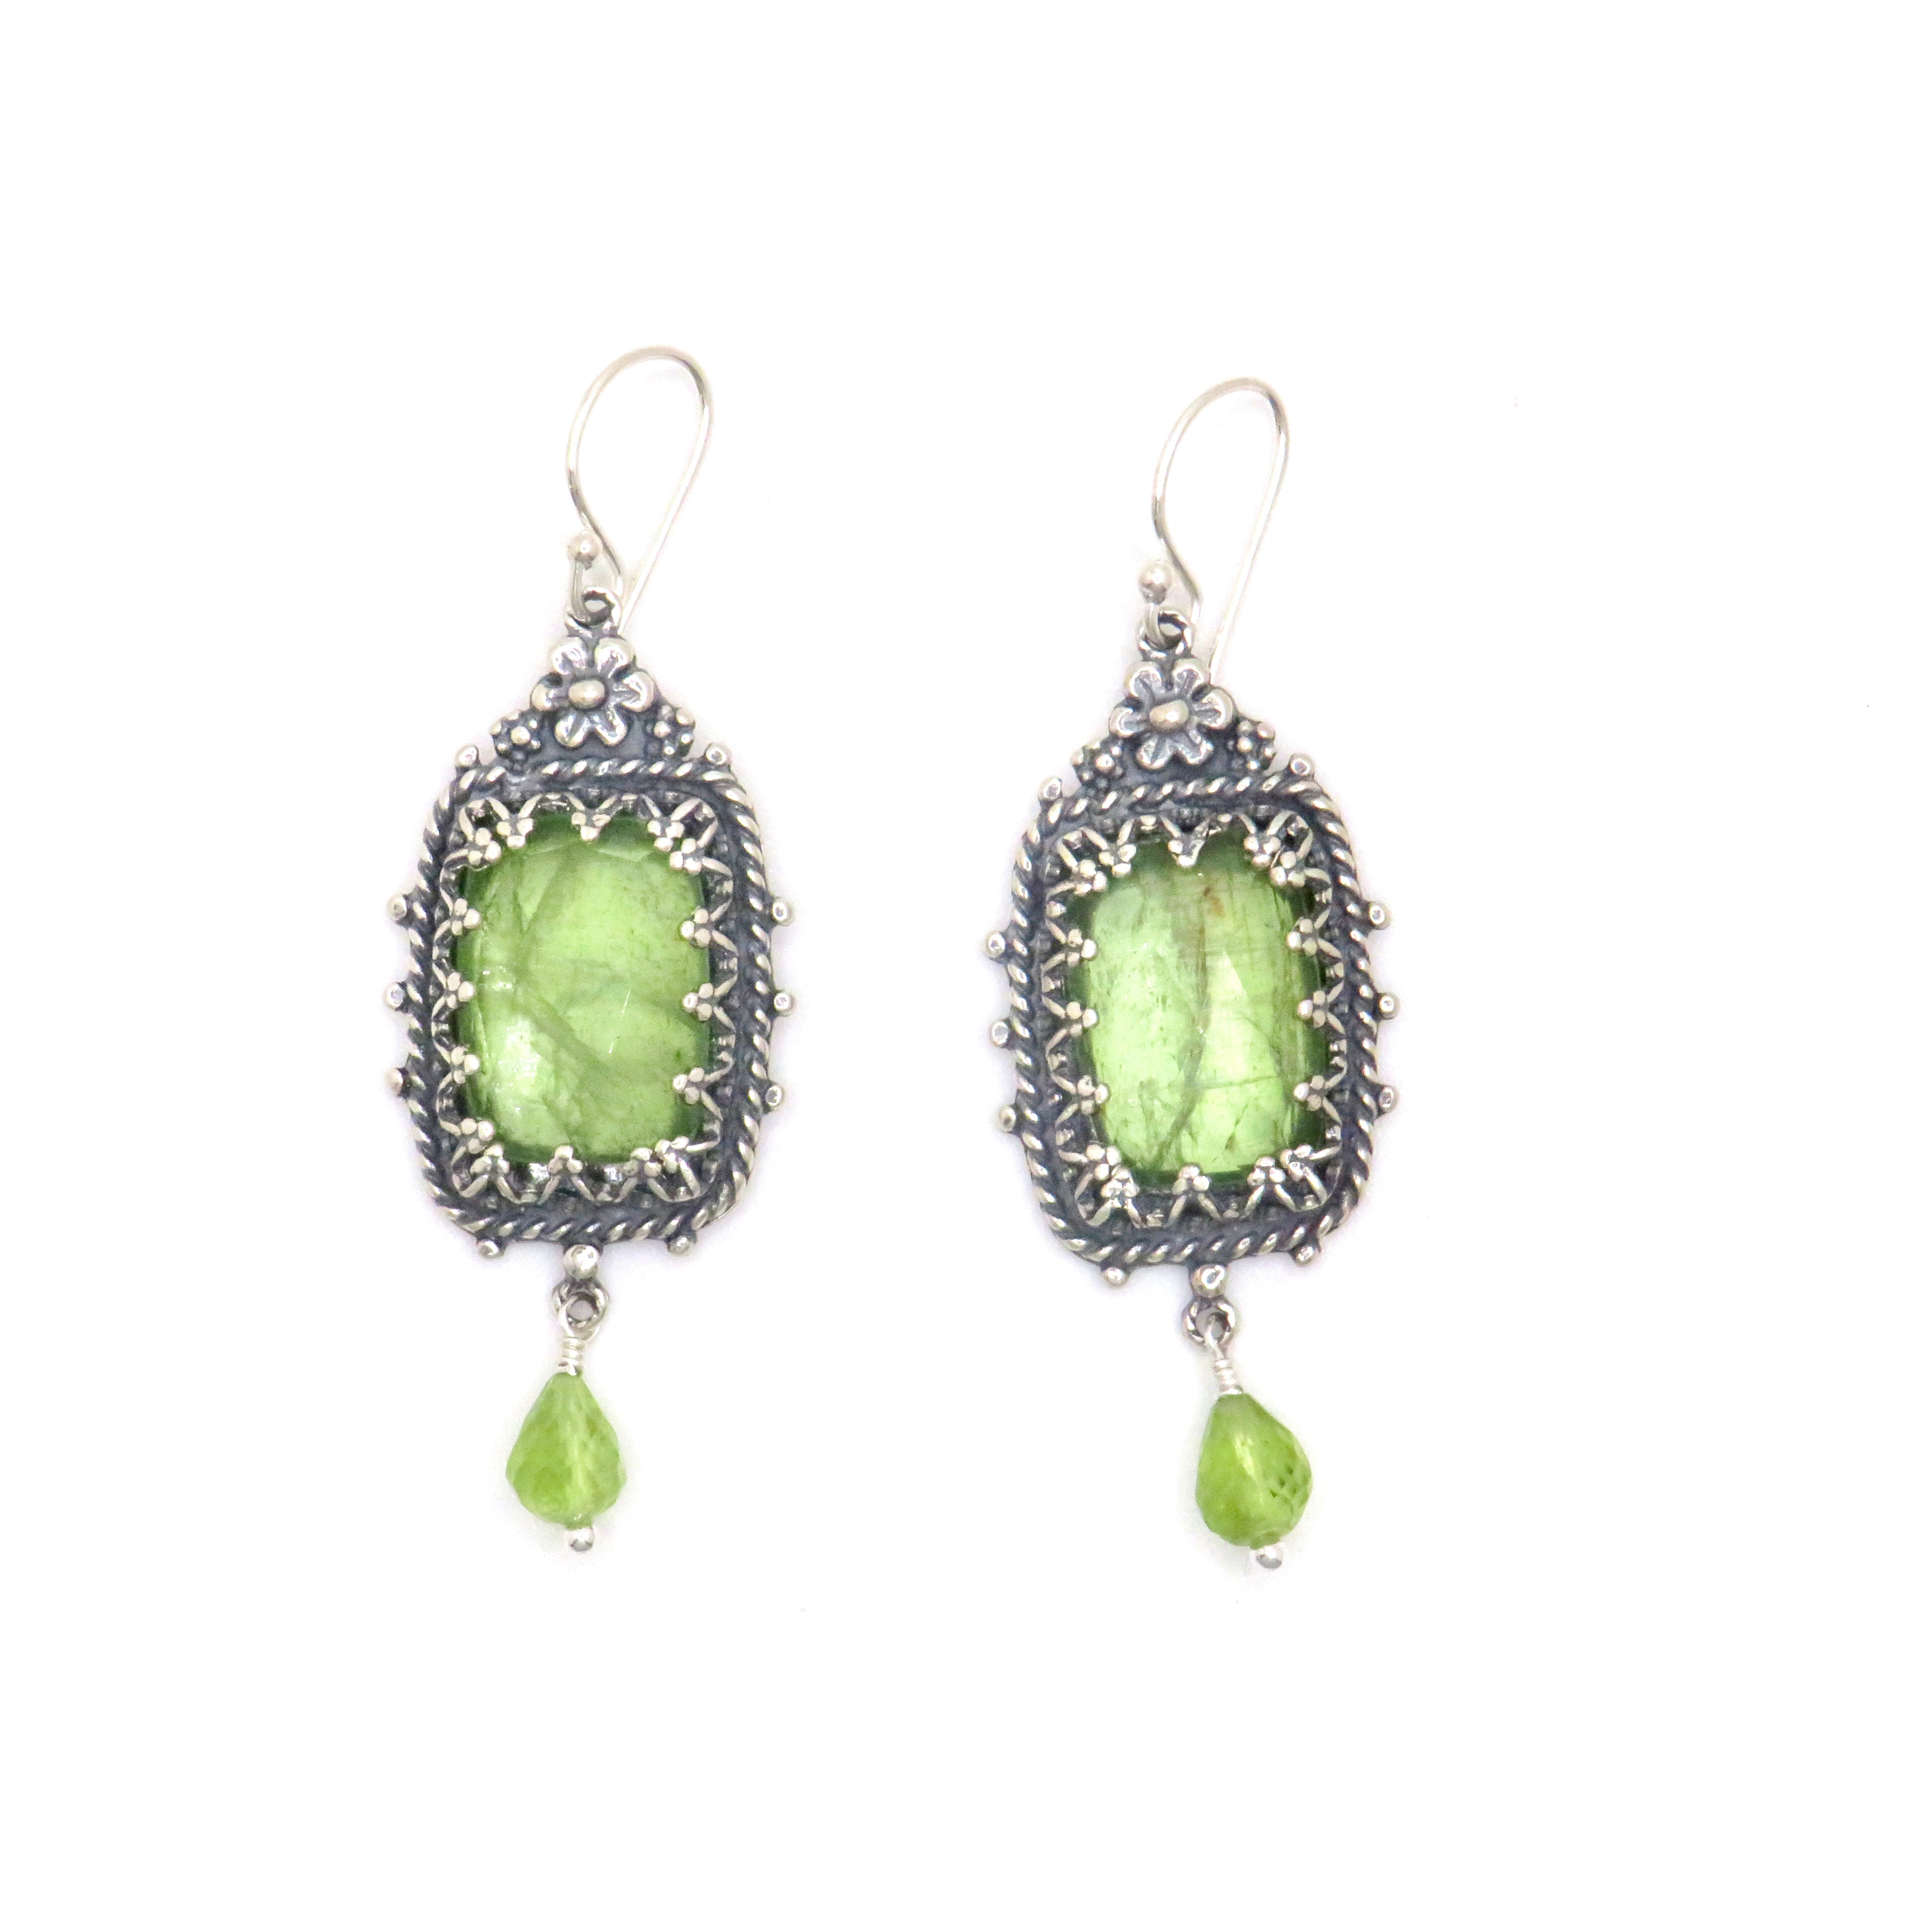 silver earrings with green gemstone